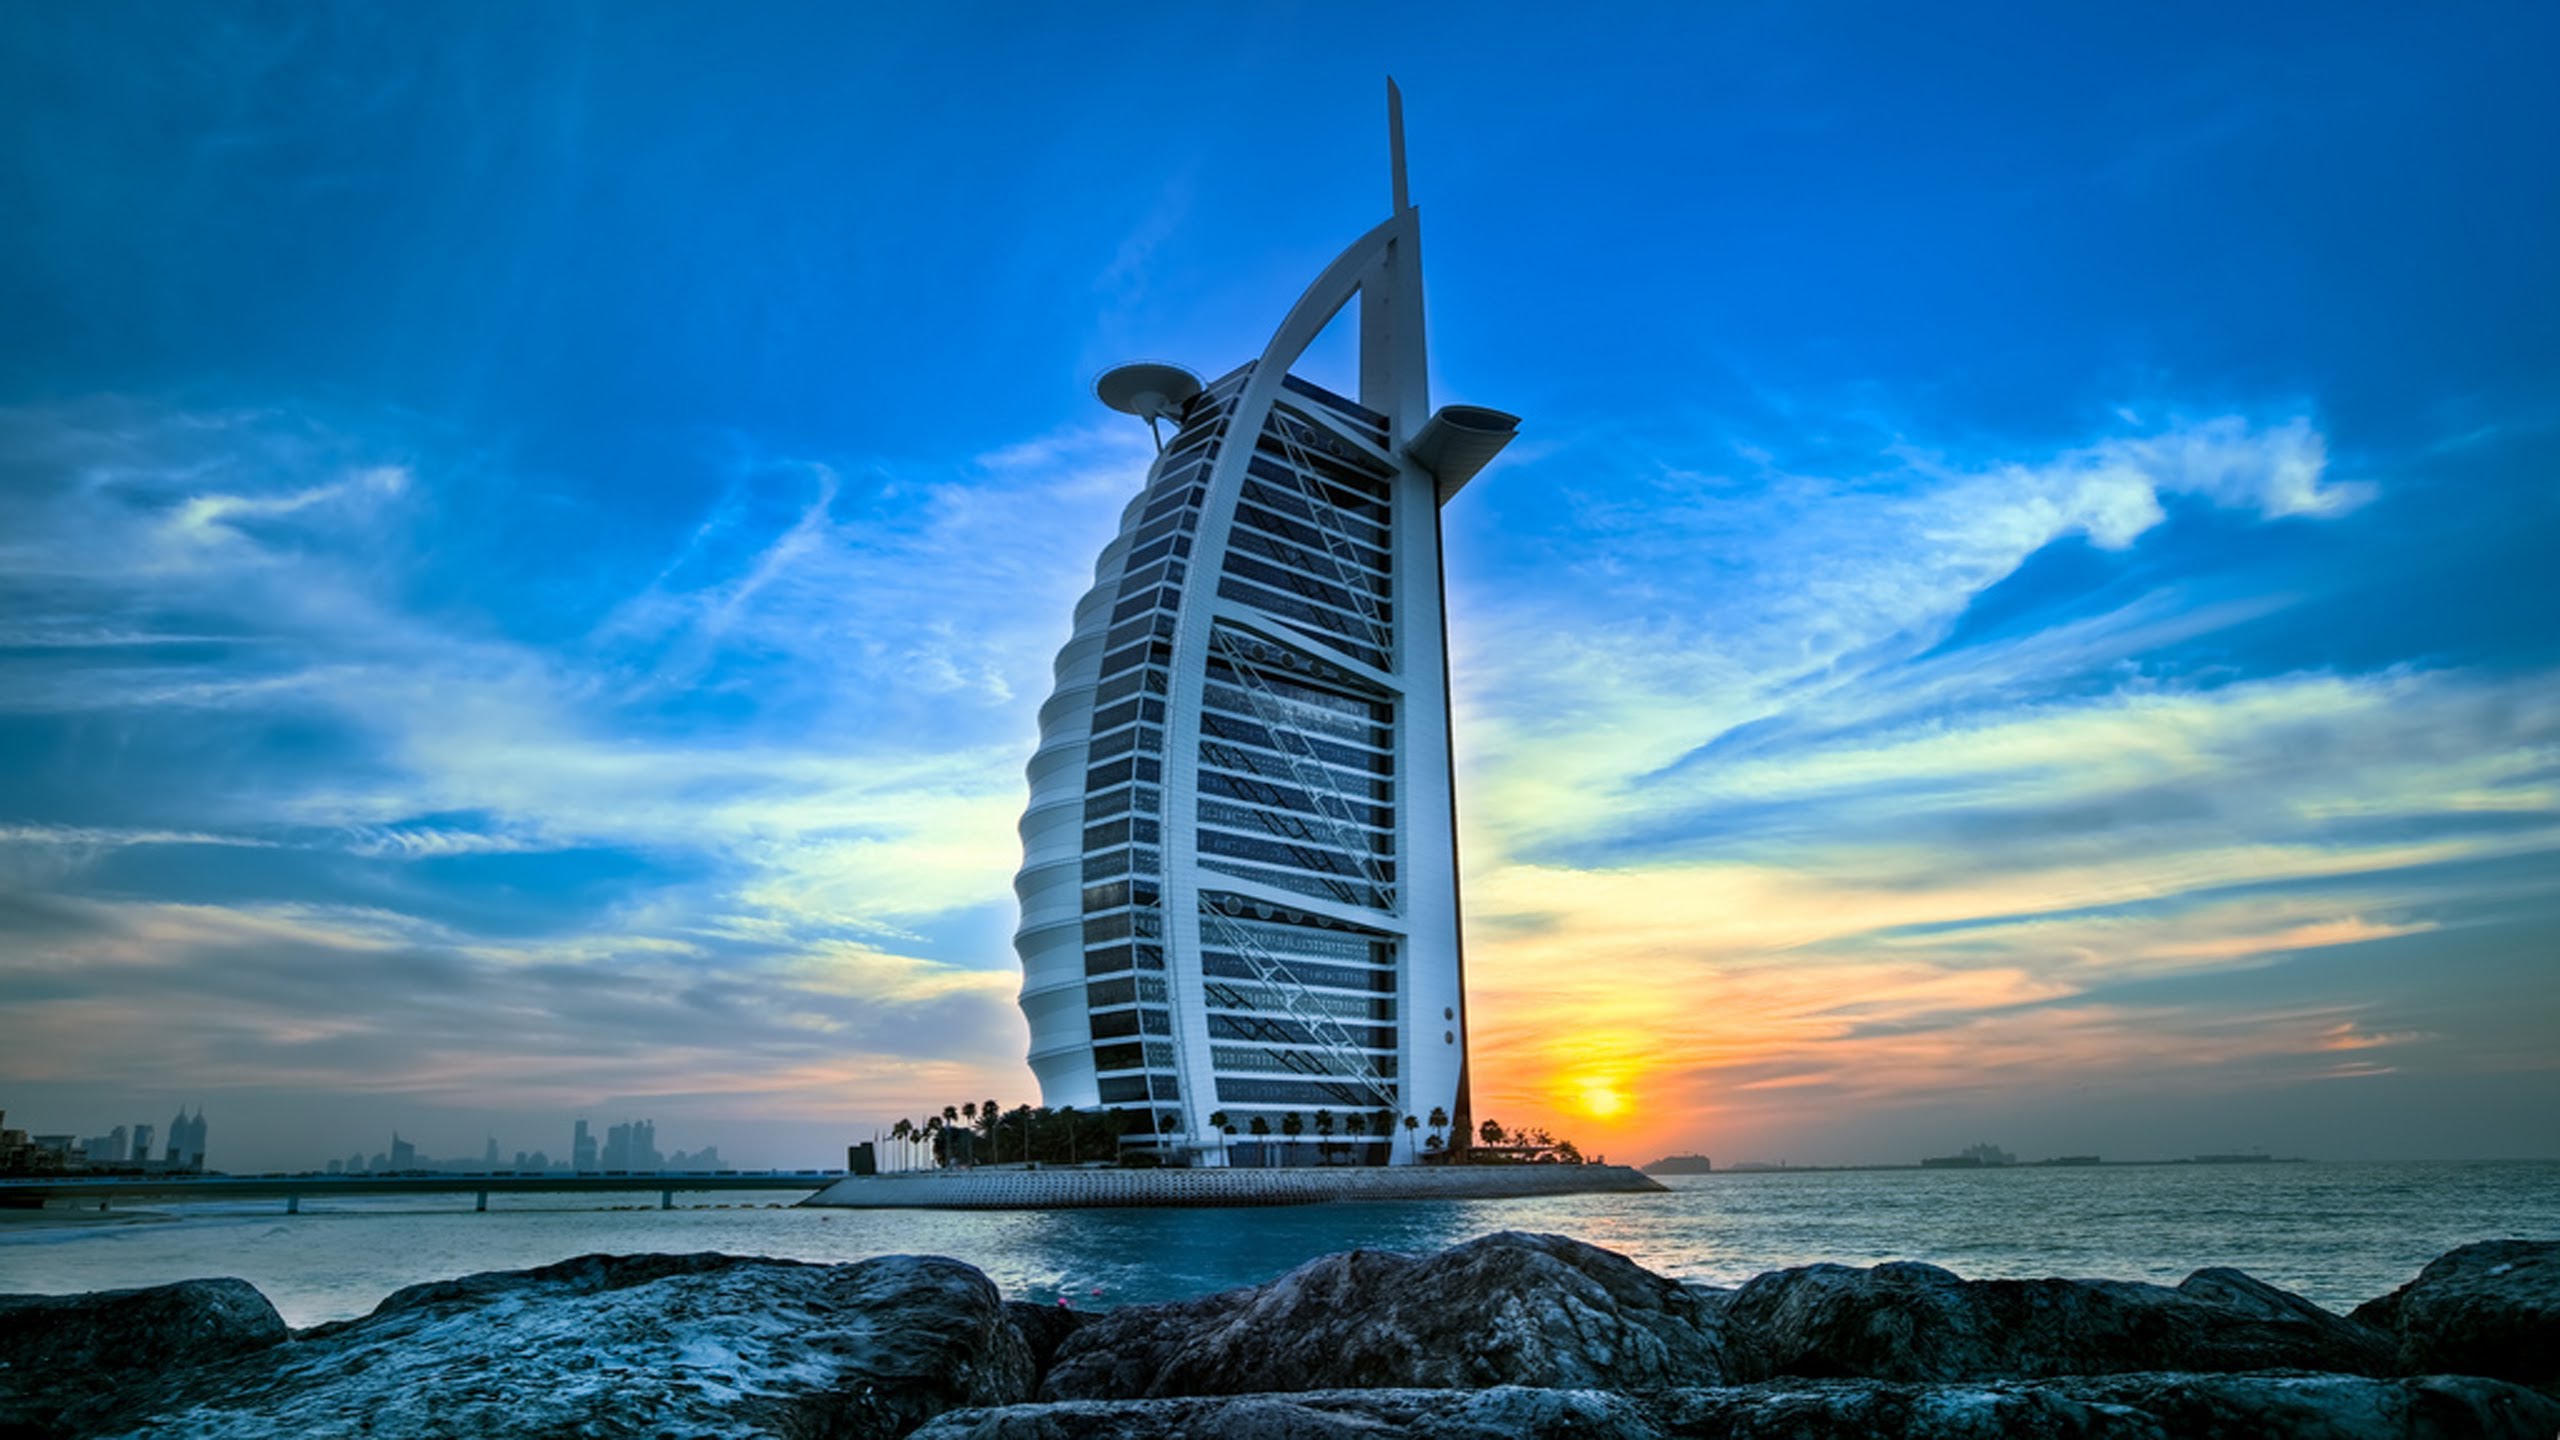 Burj Al Arab - World's Most Luxurious Hotel - A Quick Look - YouTube